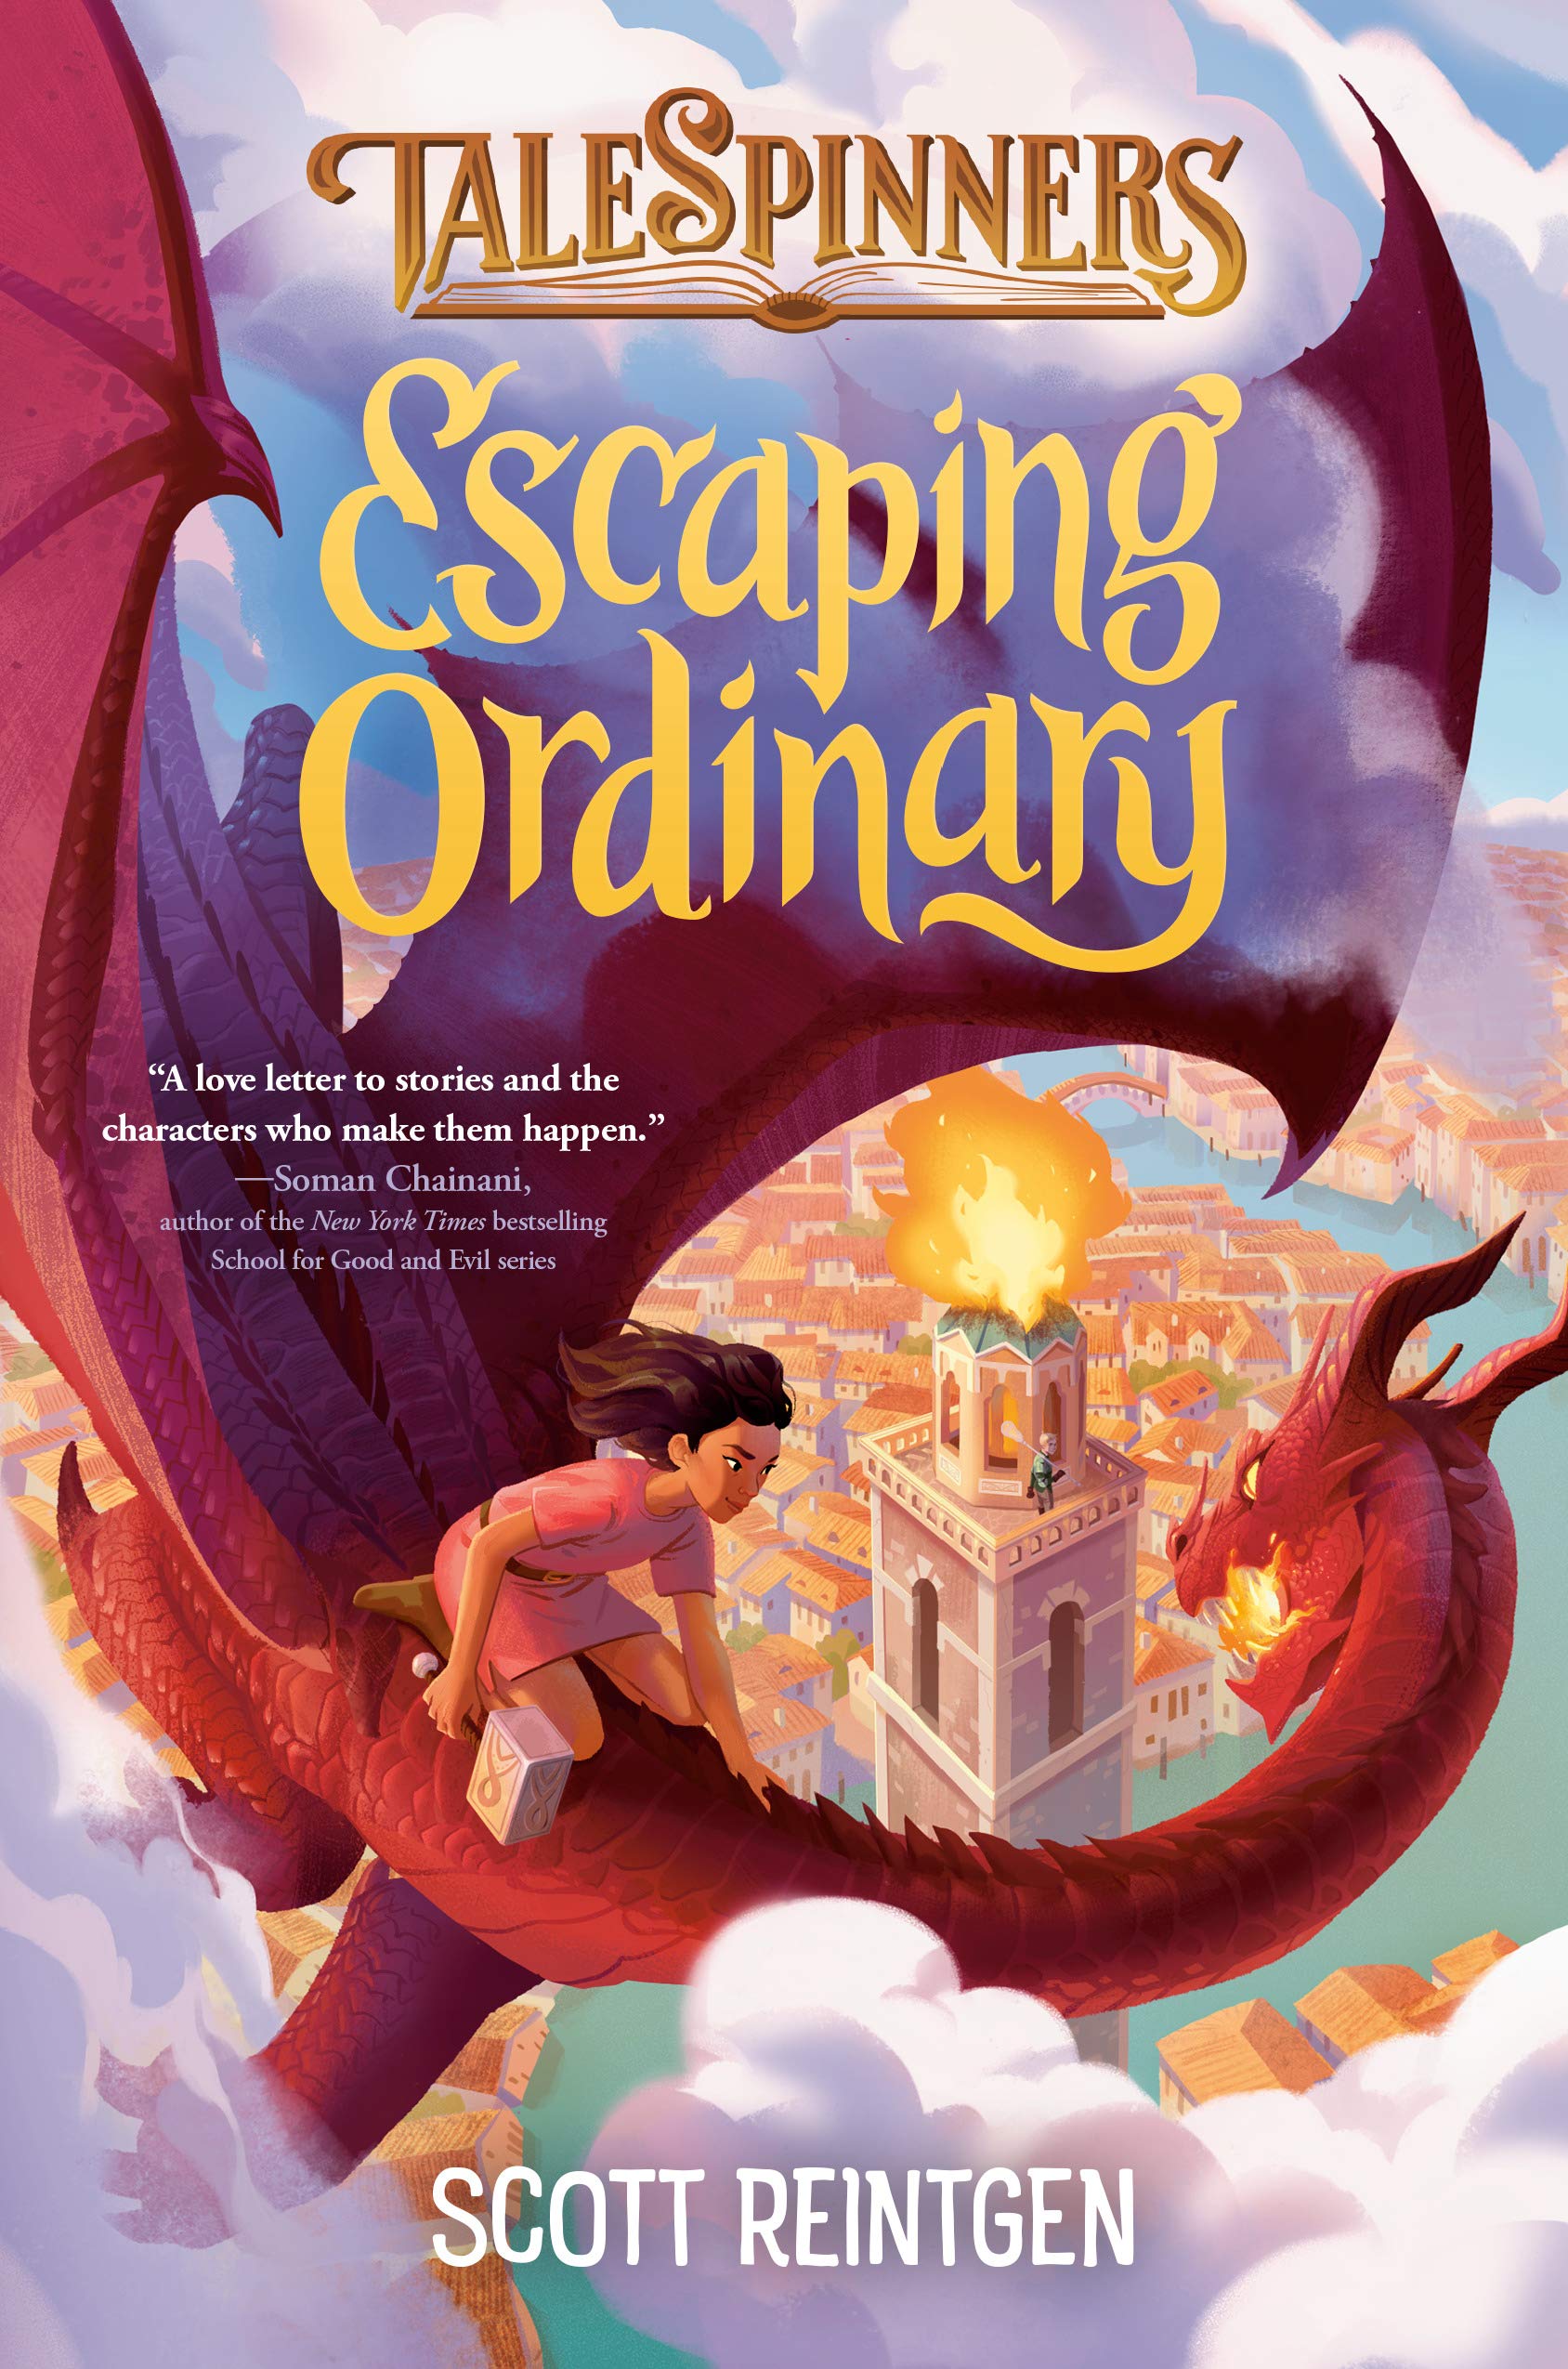 Escaping Ordinary (Talespinners #2) by Scott Reintgen